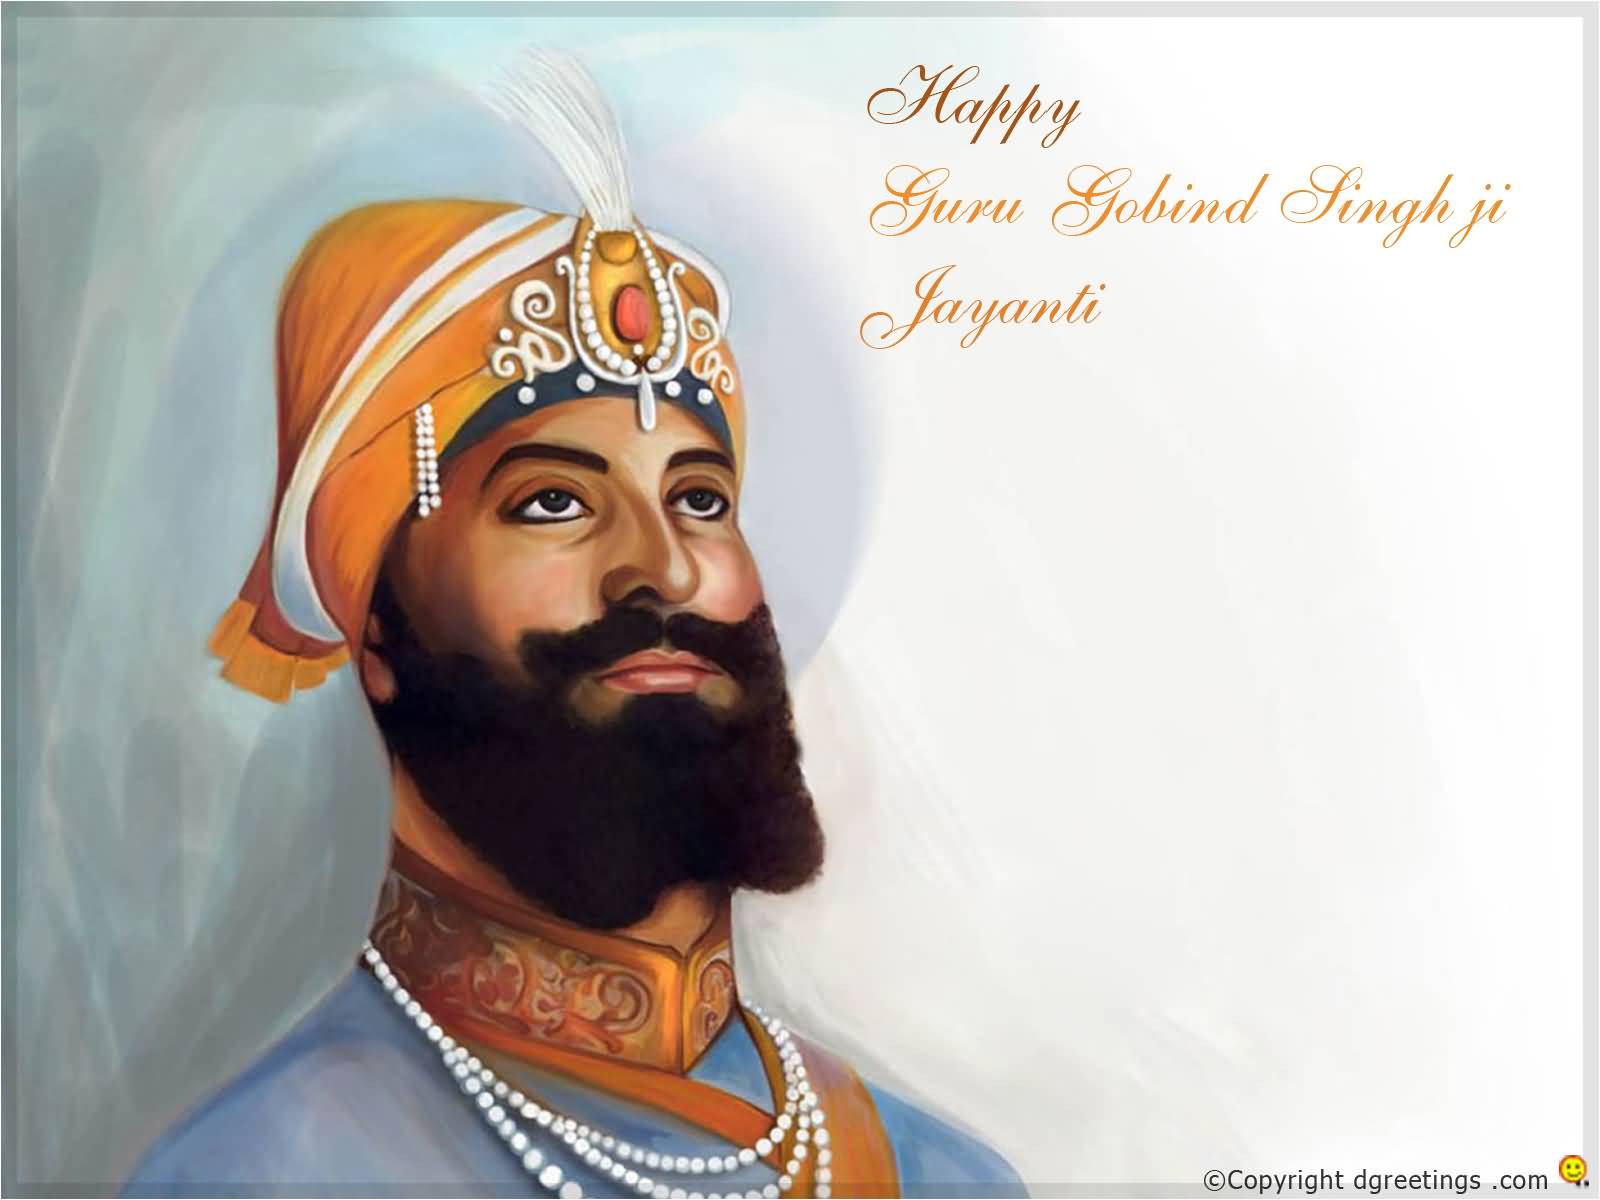 Happy Guru Gobind Singh Ji Jayanti Image